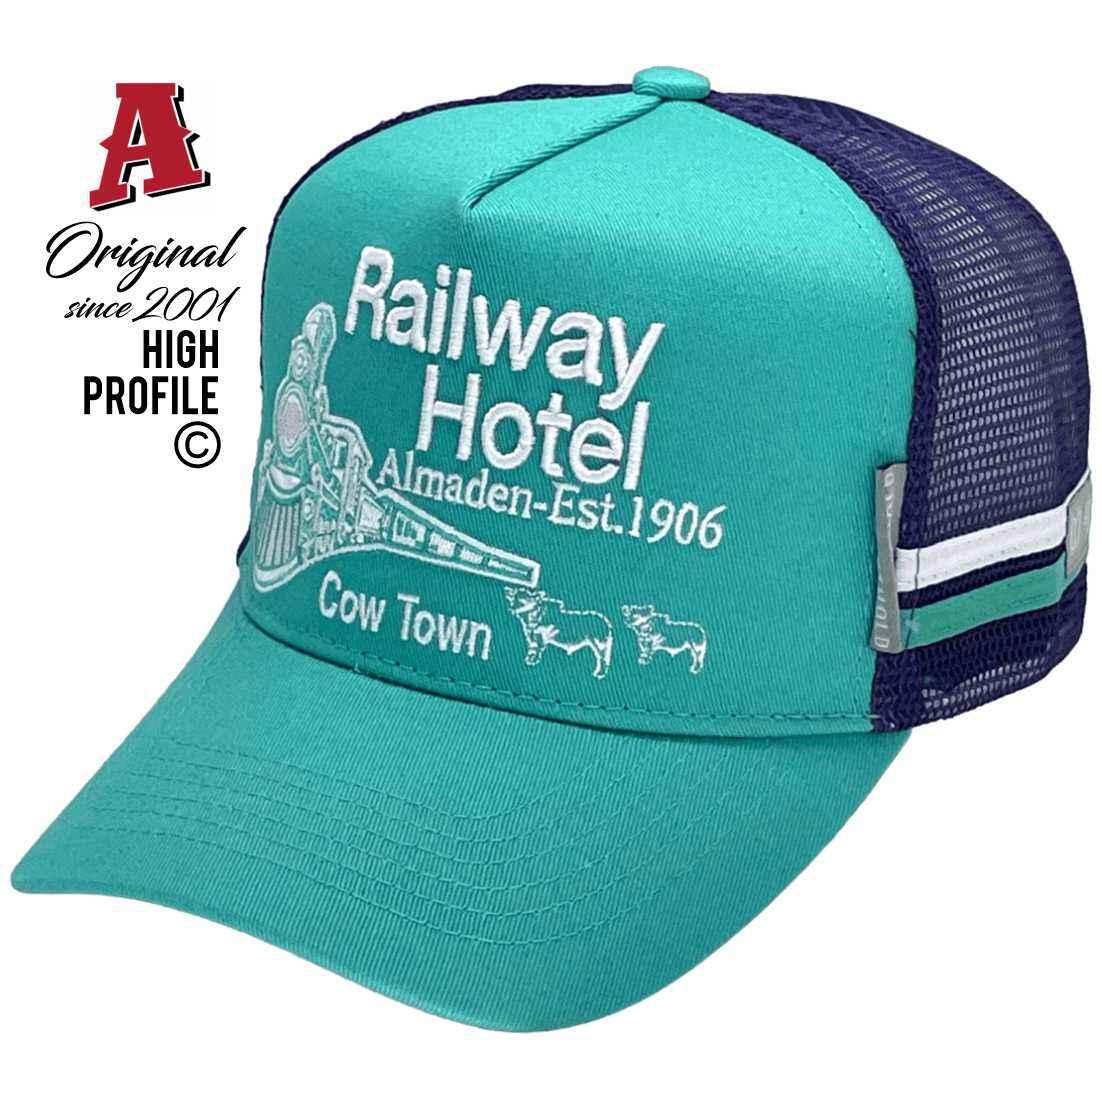 Railway Hotel Almaden- East QLD Midrange Aussie Trucker Hats with 2 SideBands Australian HeadFit Crown Green Purple Snapback